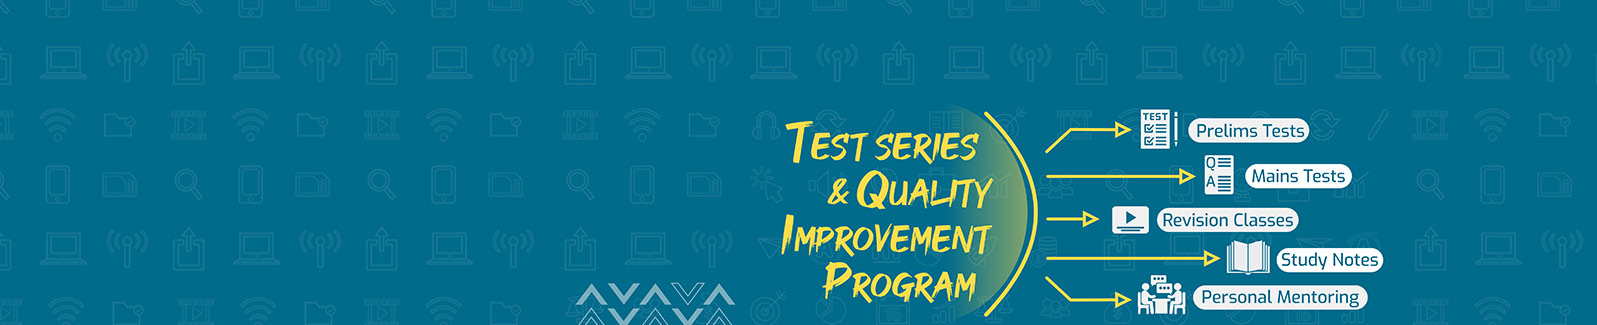 UPSC Test Series & Quality Improvement Programs for GS | Prelims & Mains